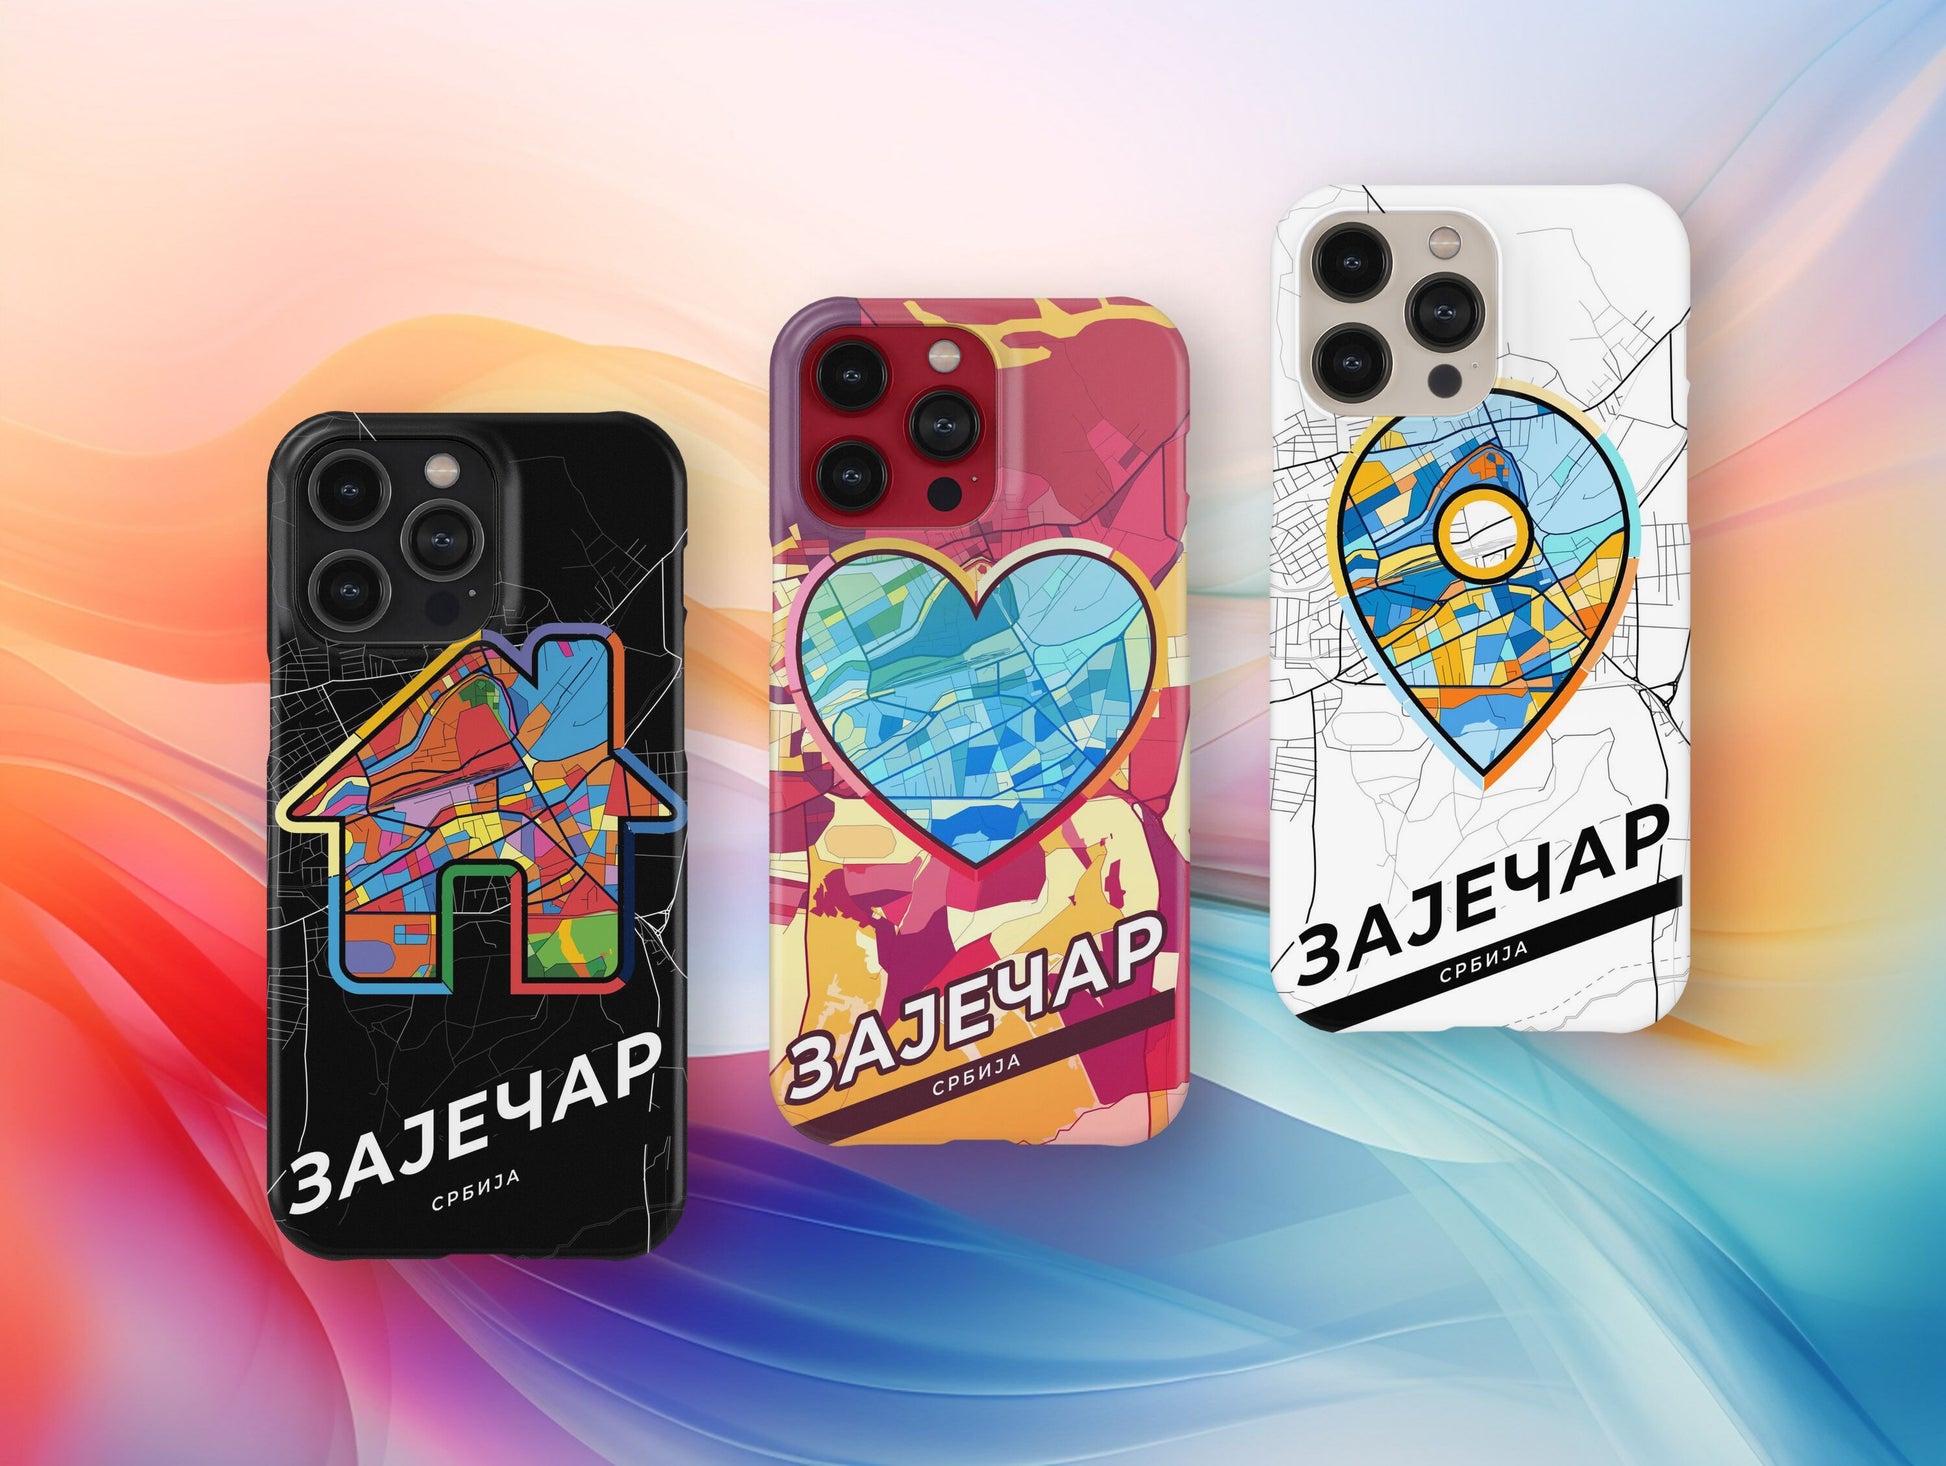 Zaječar Serbia slim phone case with colorful icon